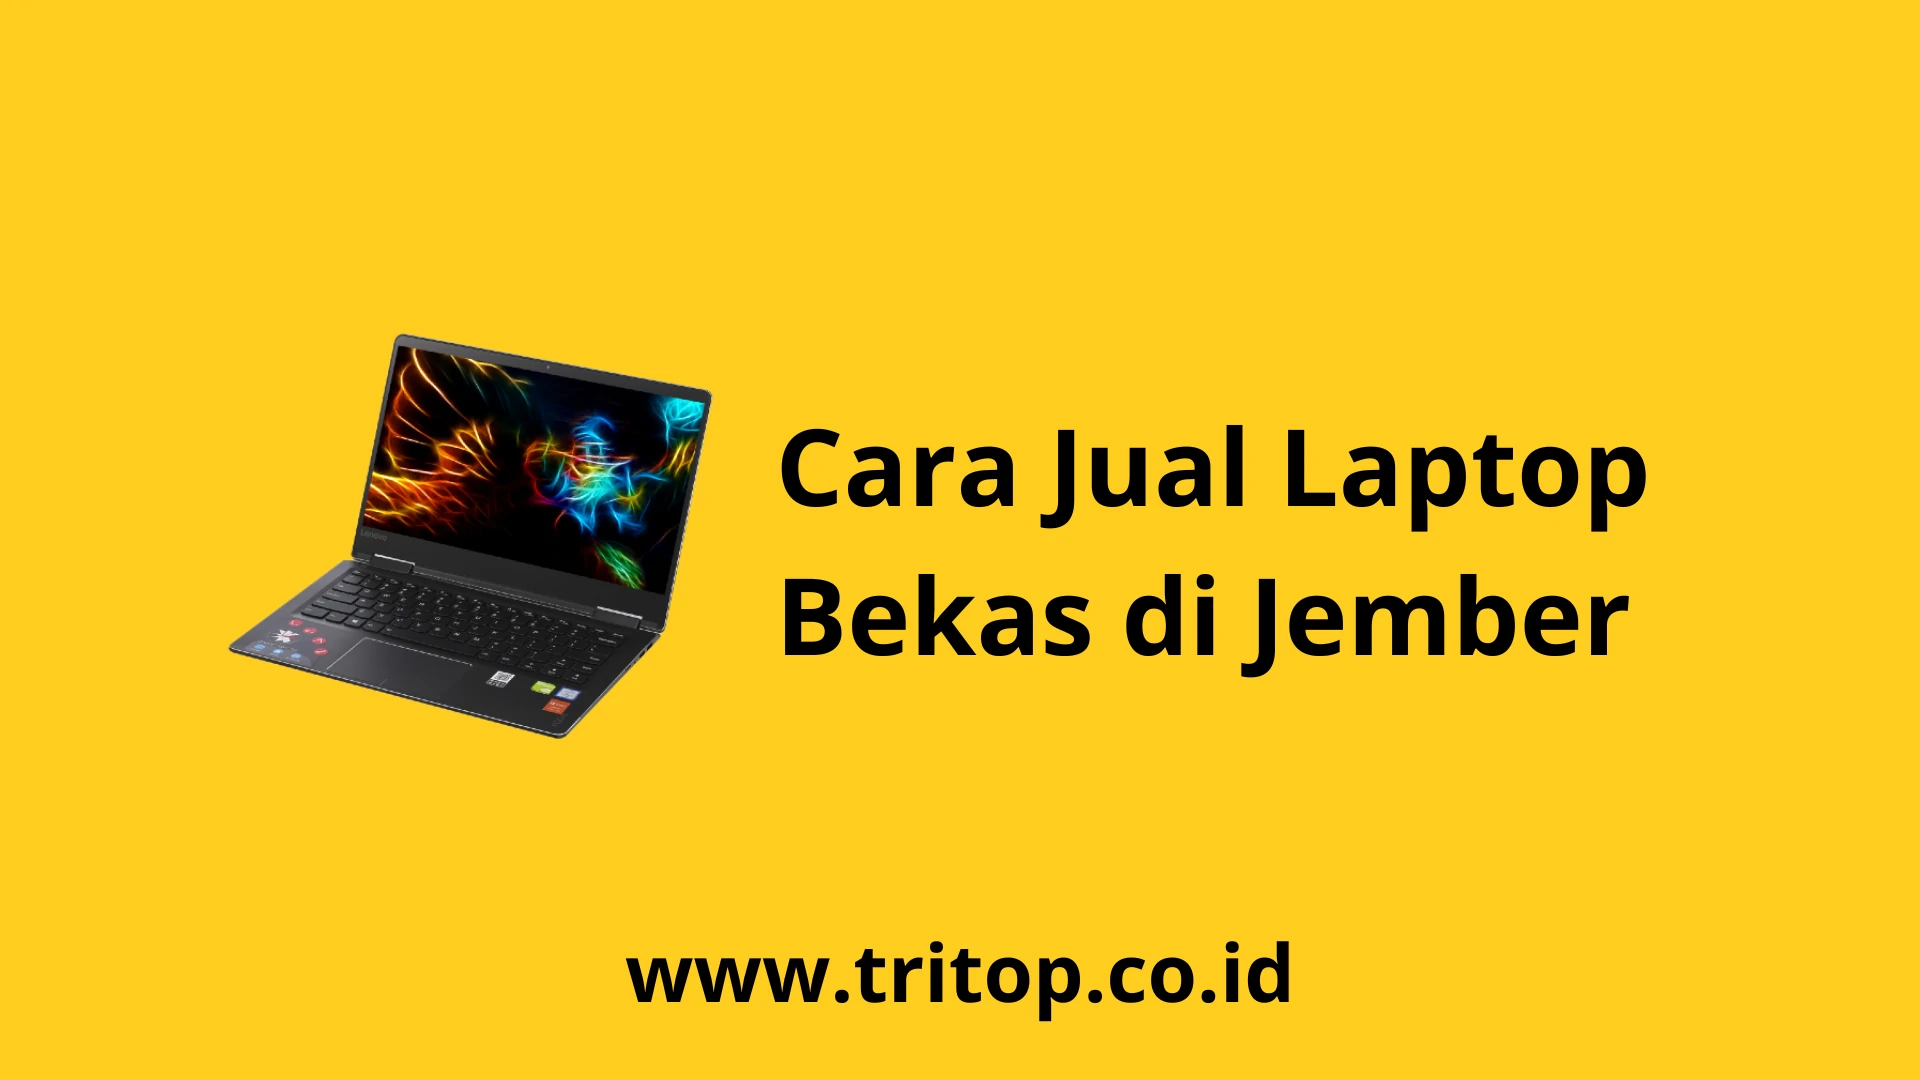 Jual Laptop Bekas Jember Tritop.co.id